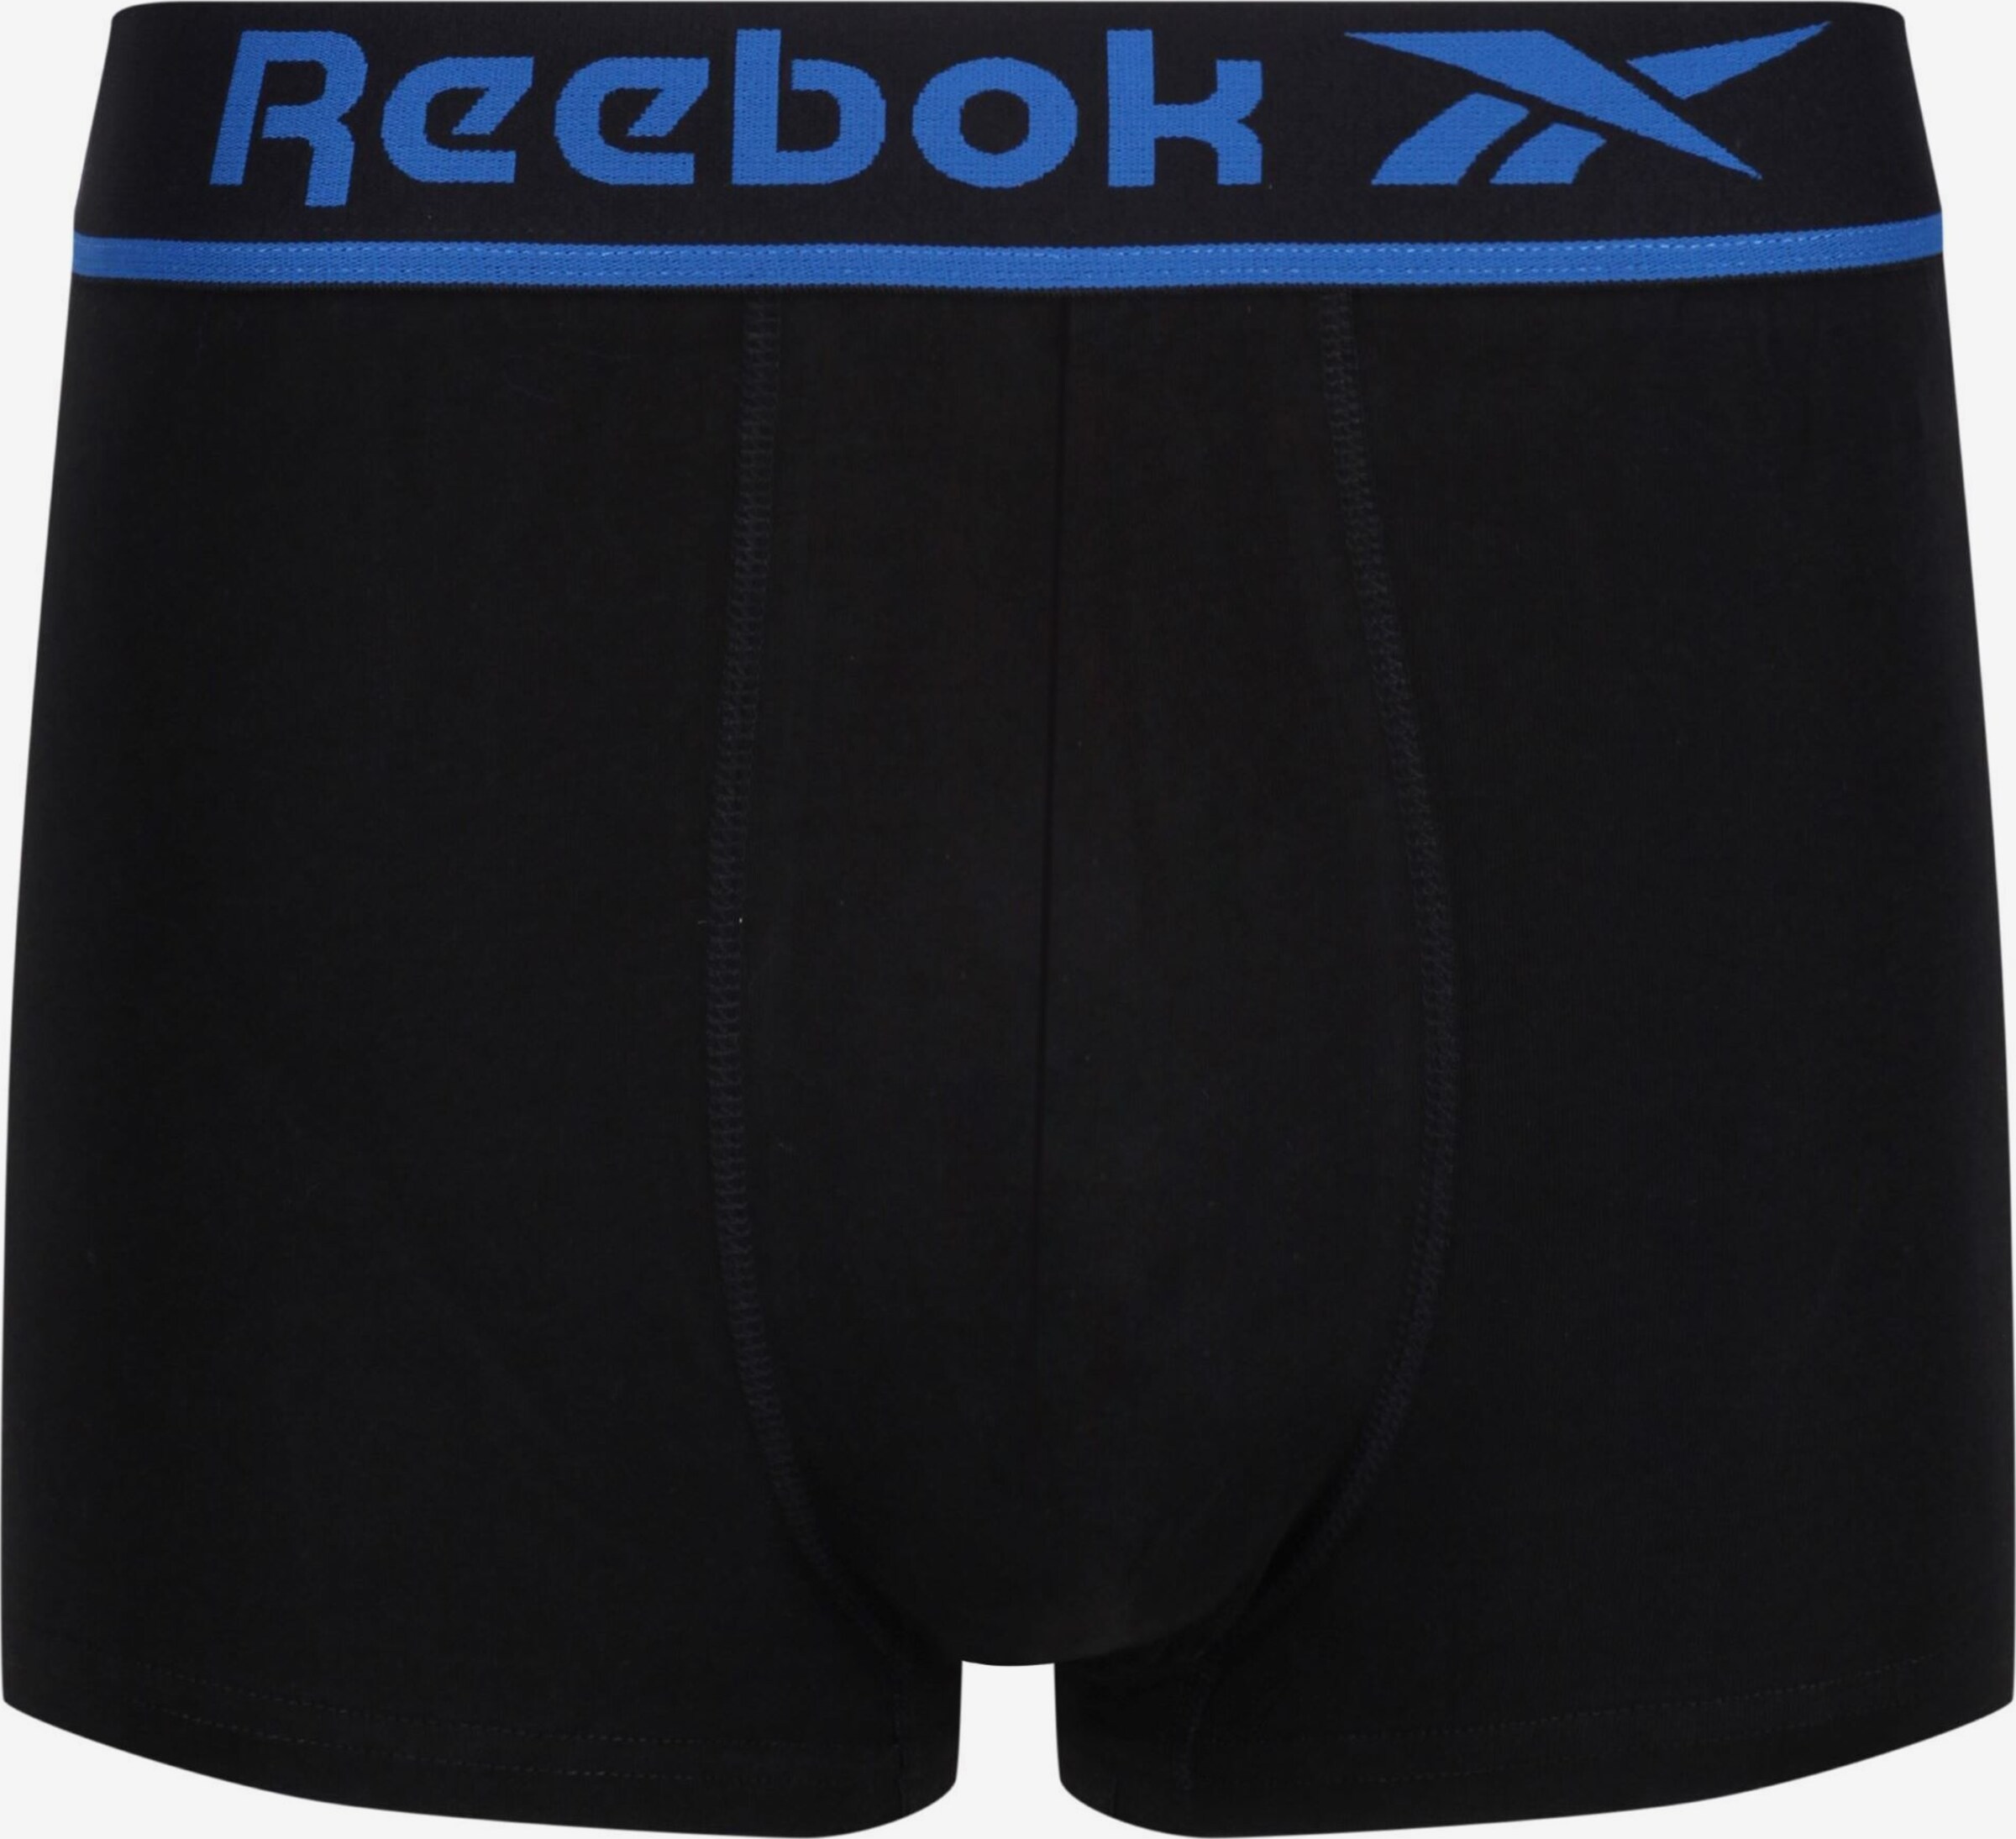 Reebok Athletic Underwear in Black